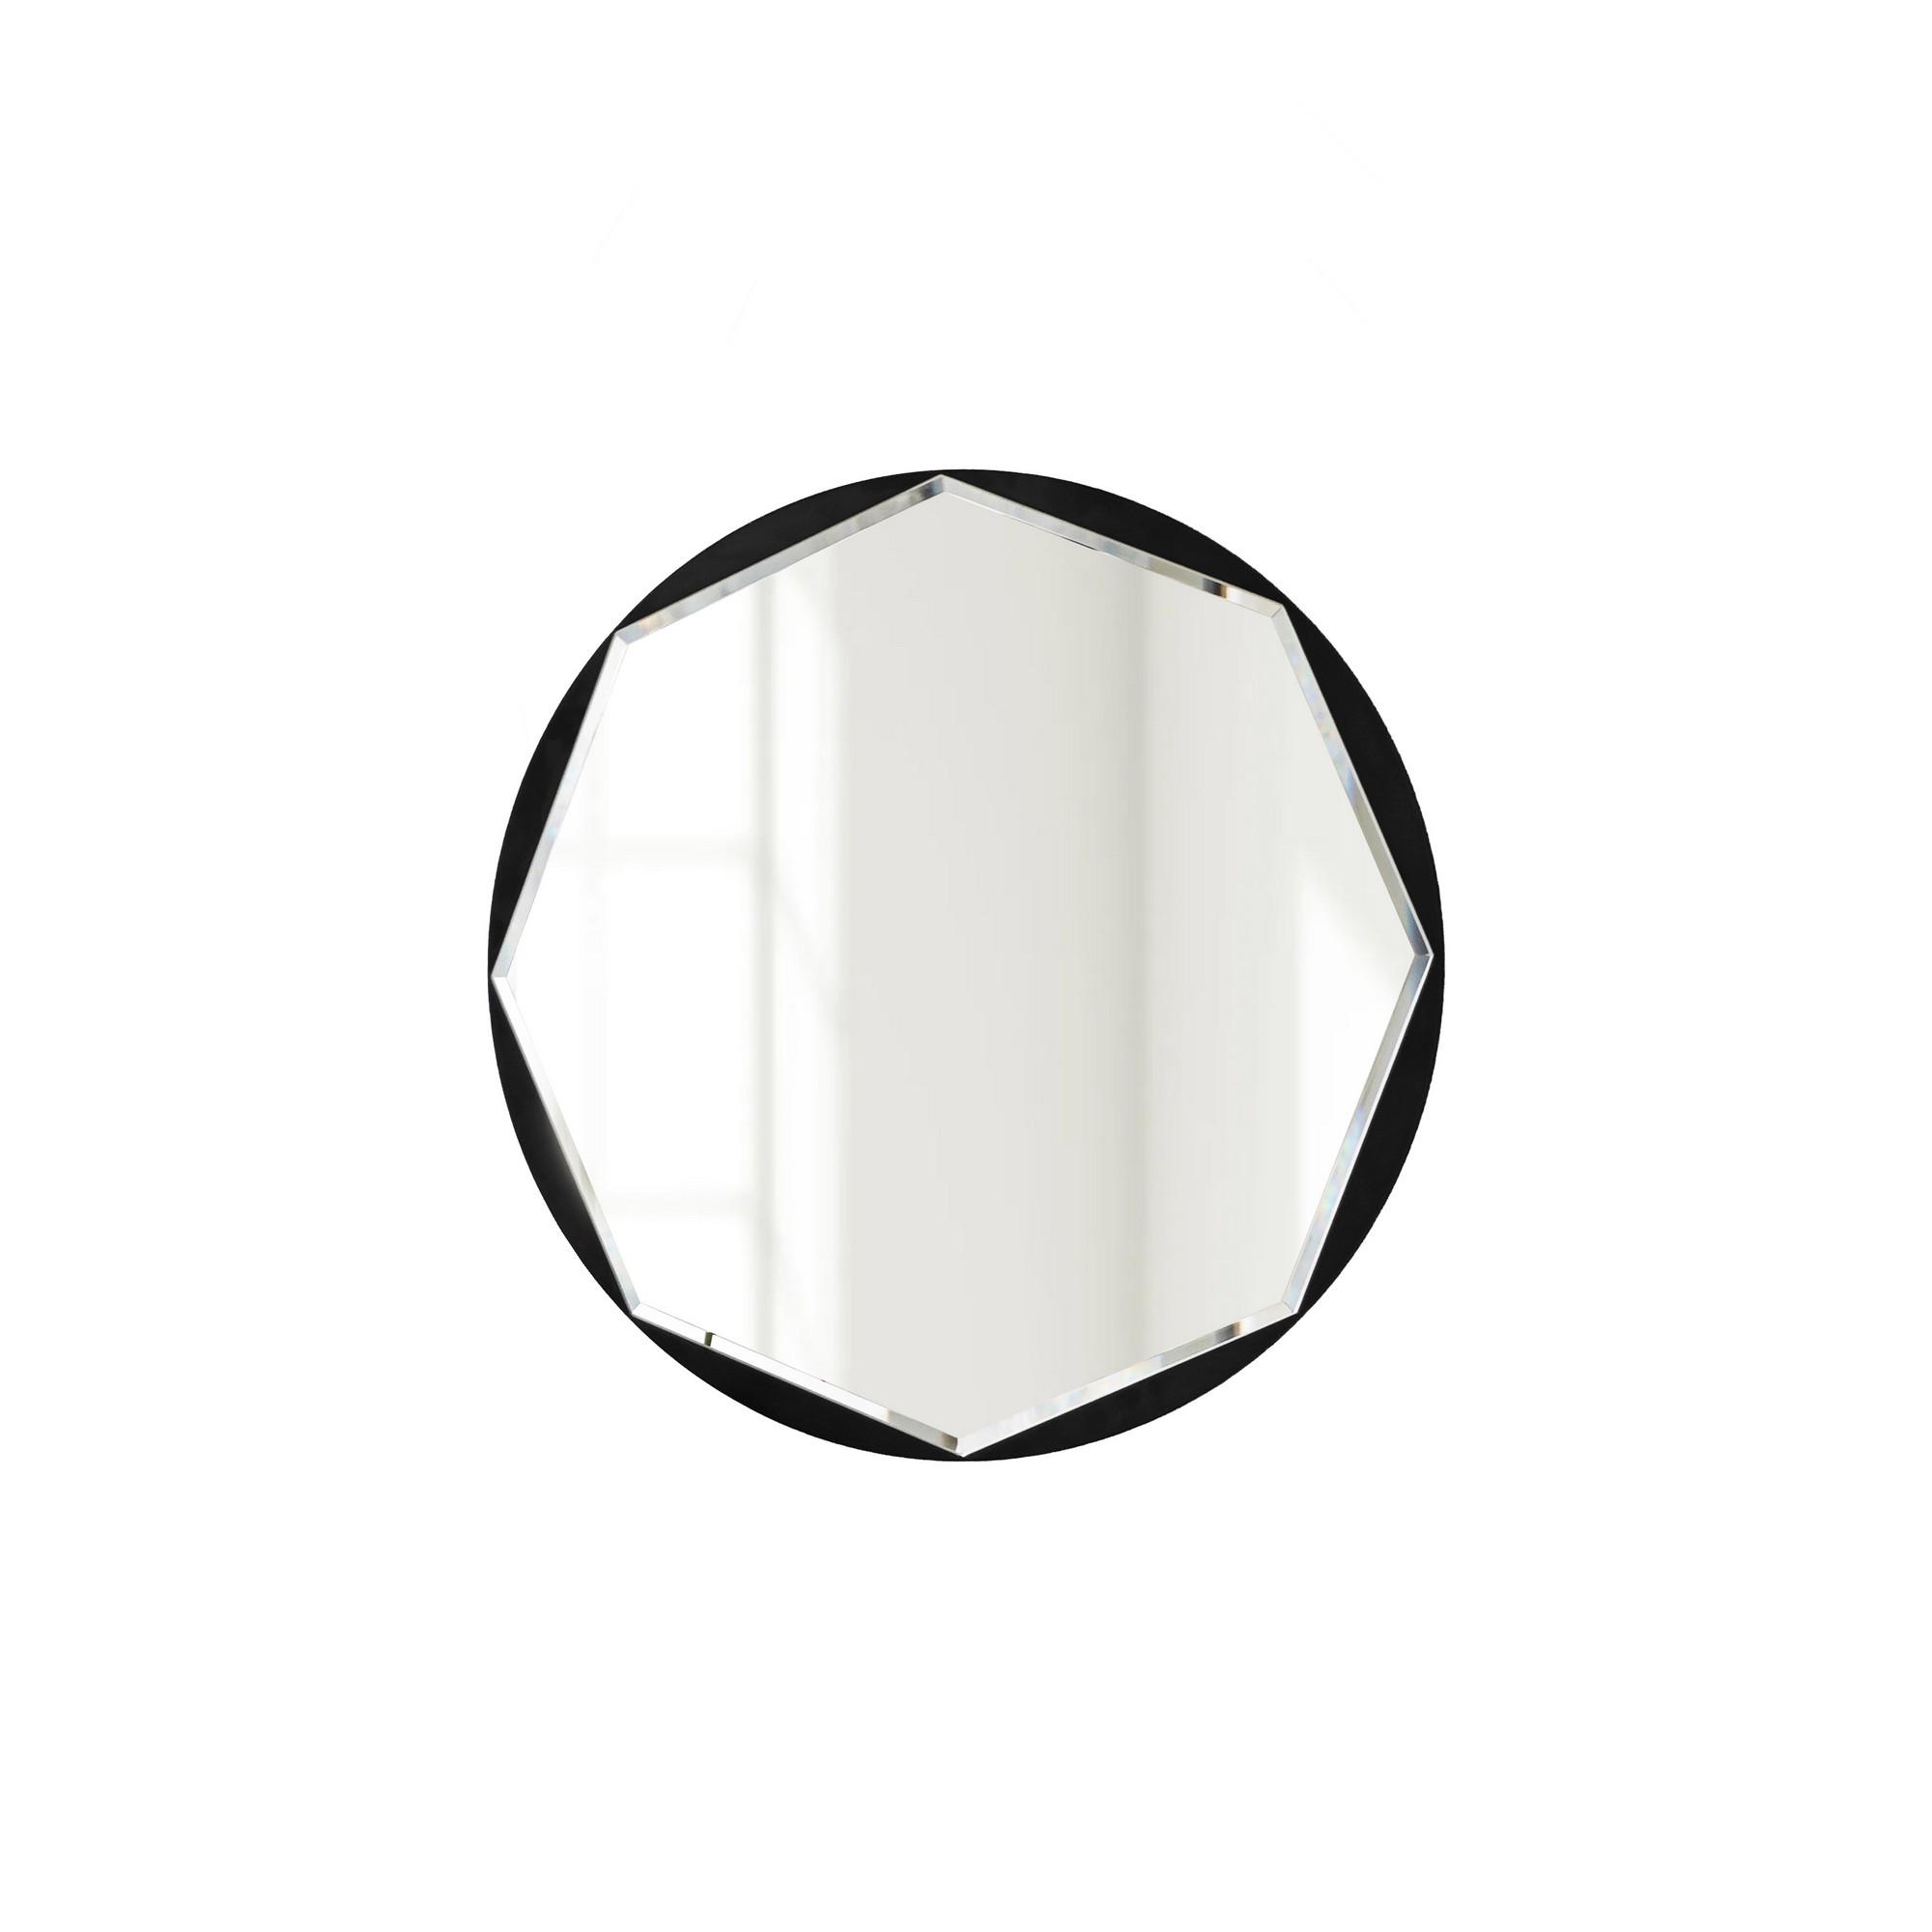 NORDVÄRK Stella vægspejl, ottekantet - spejlglas og sort melamin (Ø60)